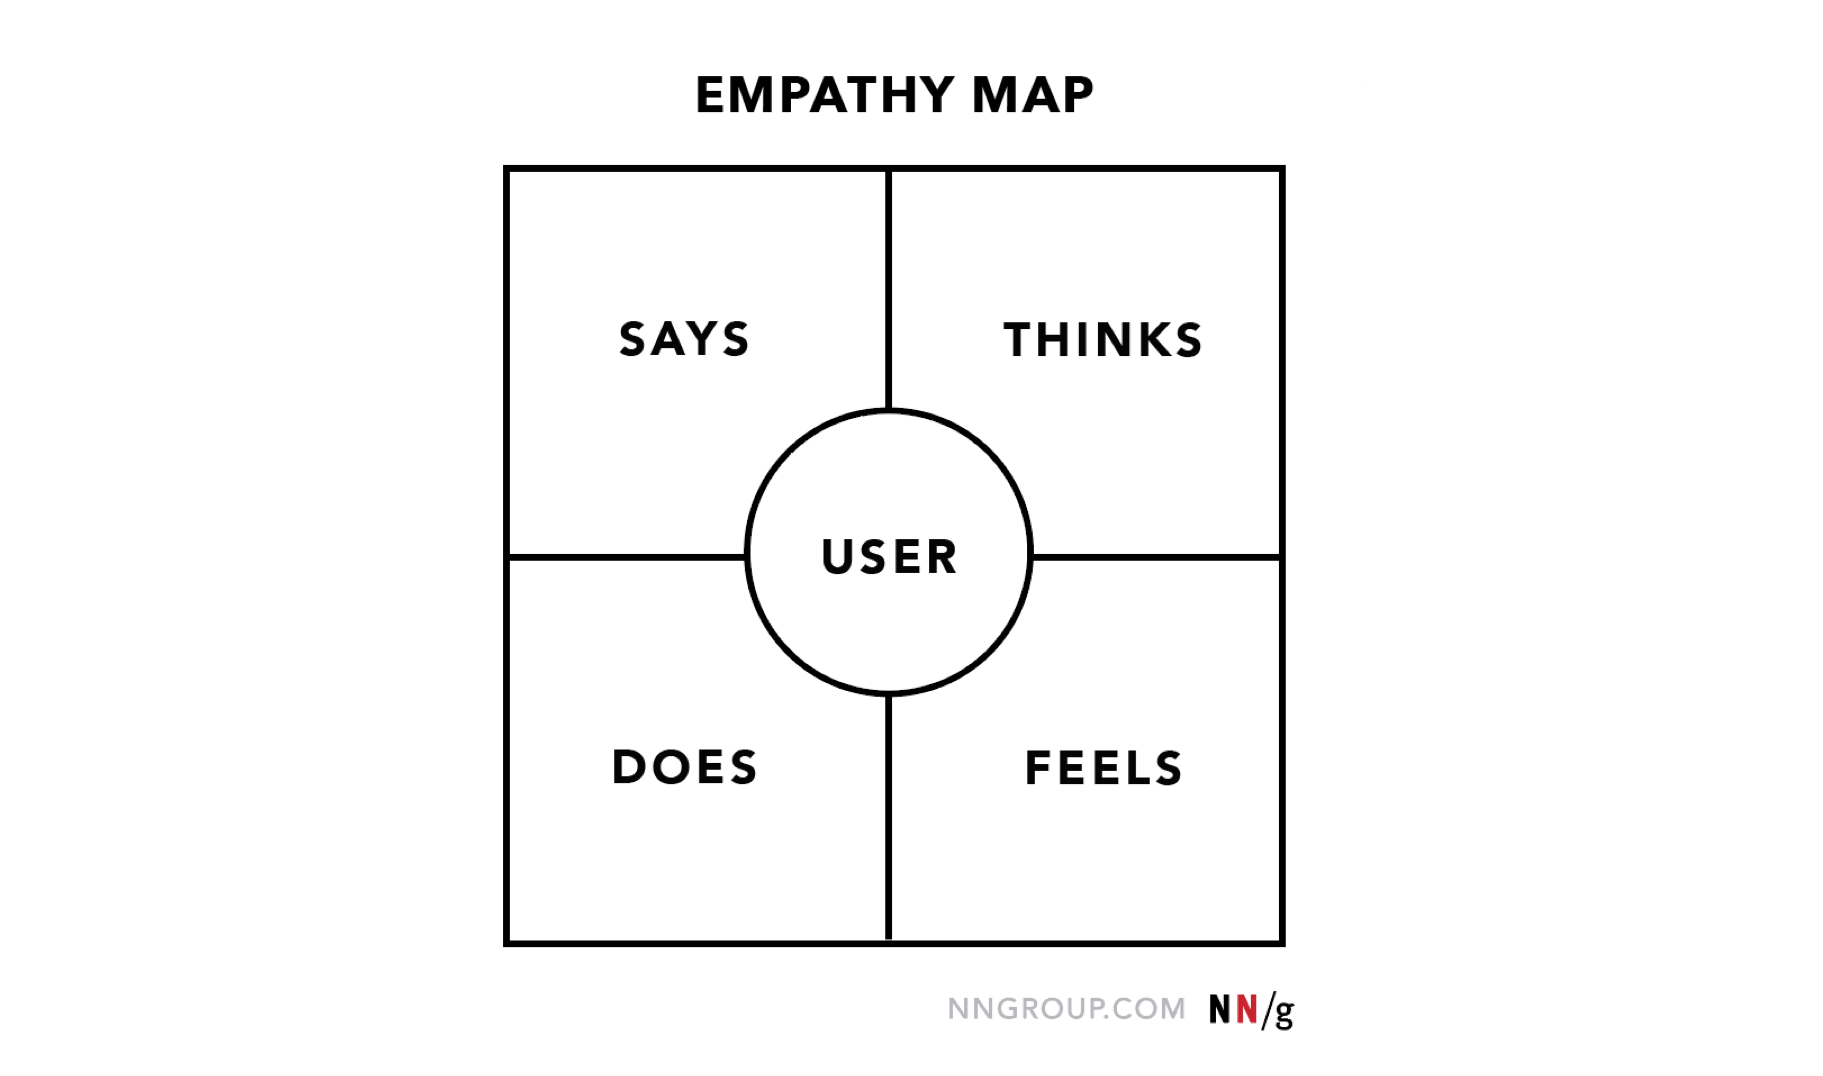 nielsen norman group empathy map